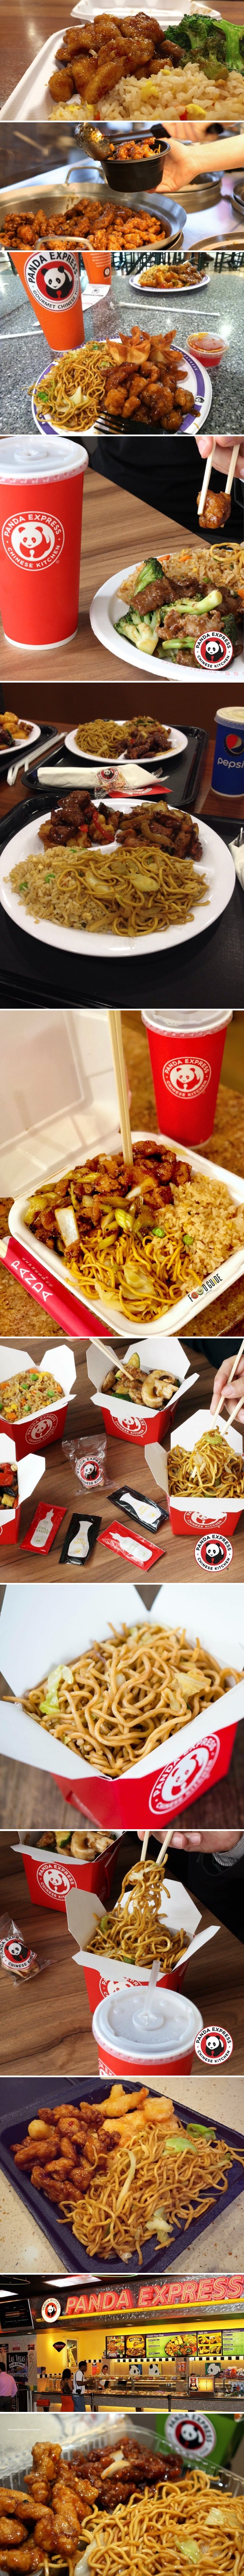 American Chinese cuisine